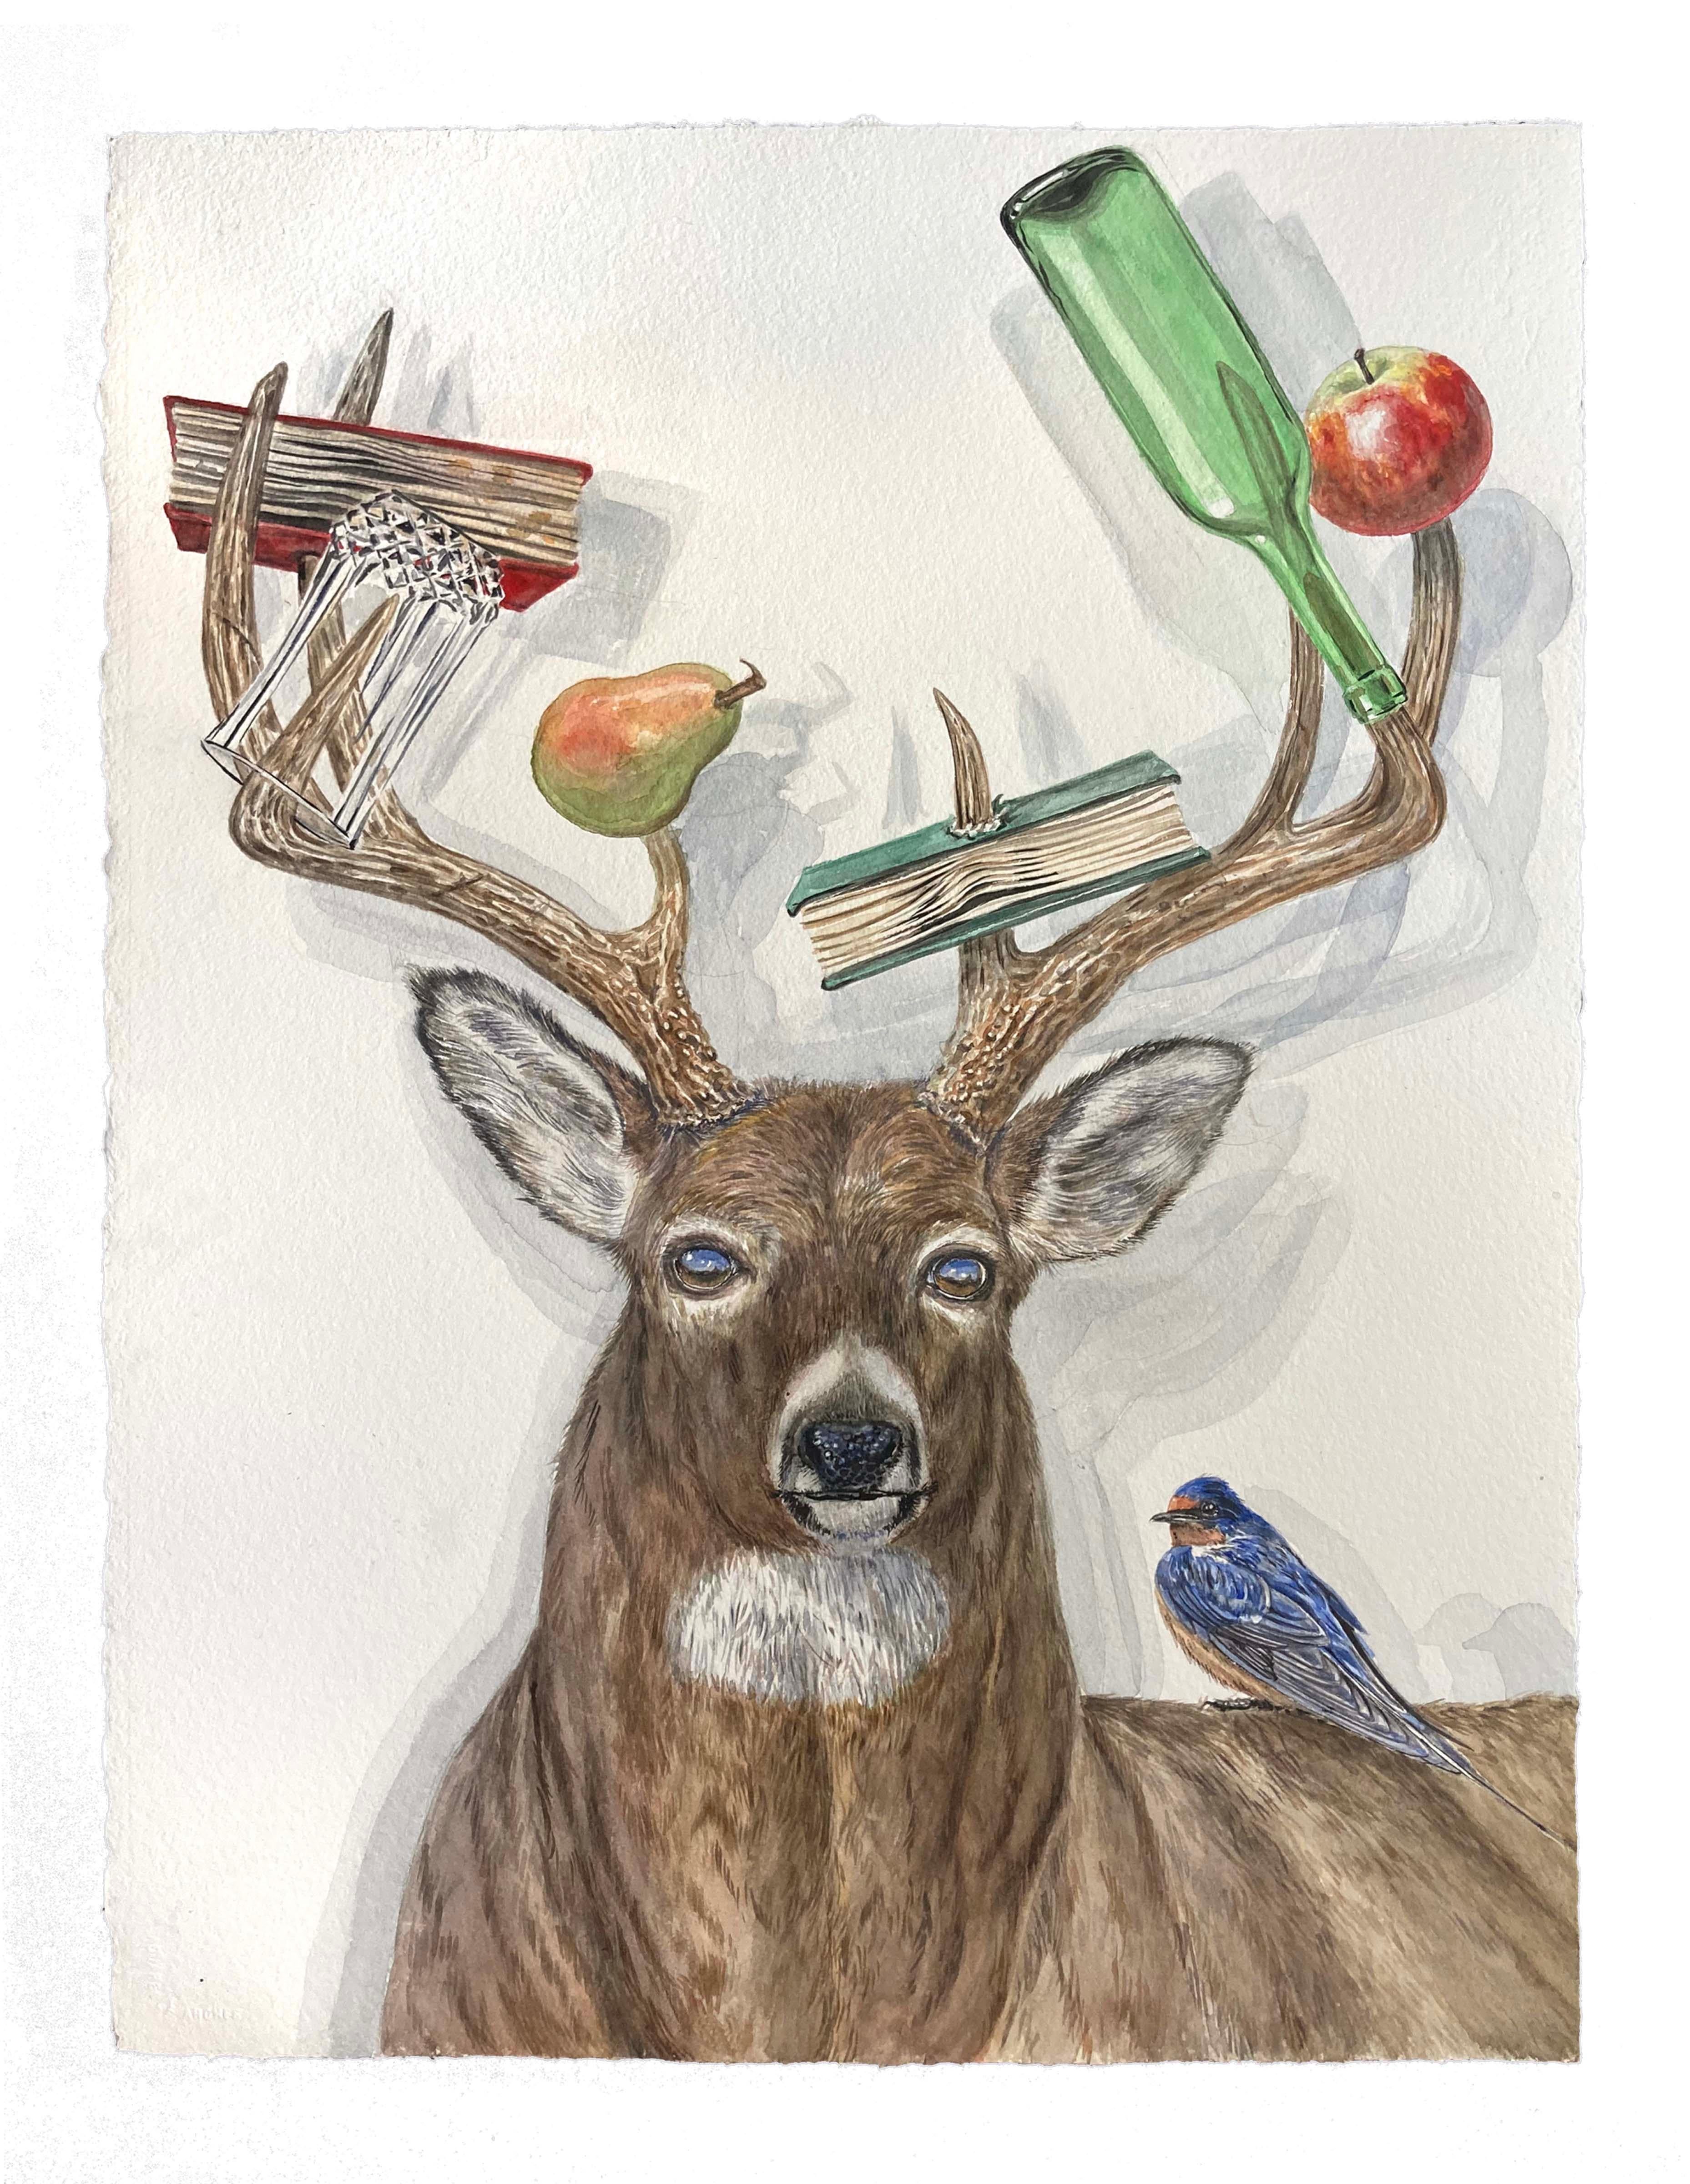 Thomas Broadbent Animal Art - "The Rack" Contemporary Surrealist Painting (deer bust)